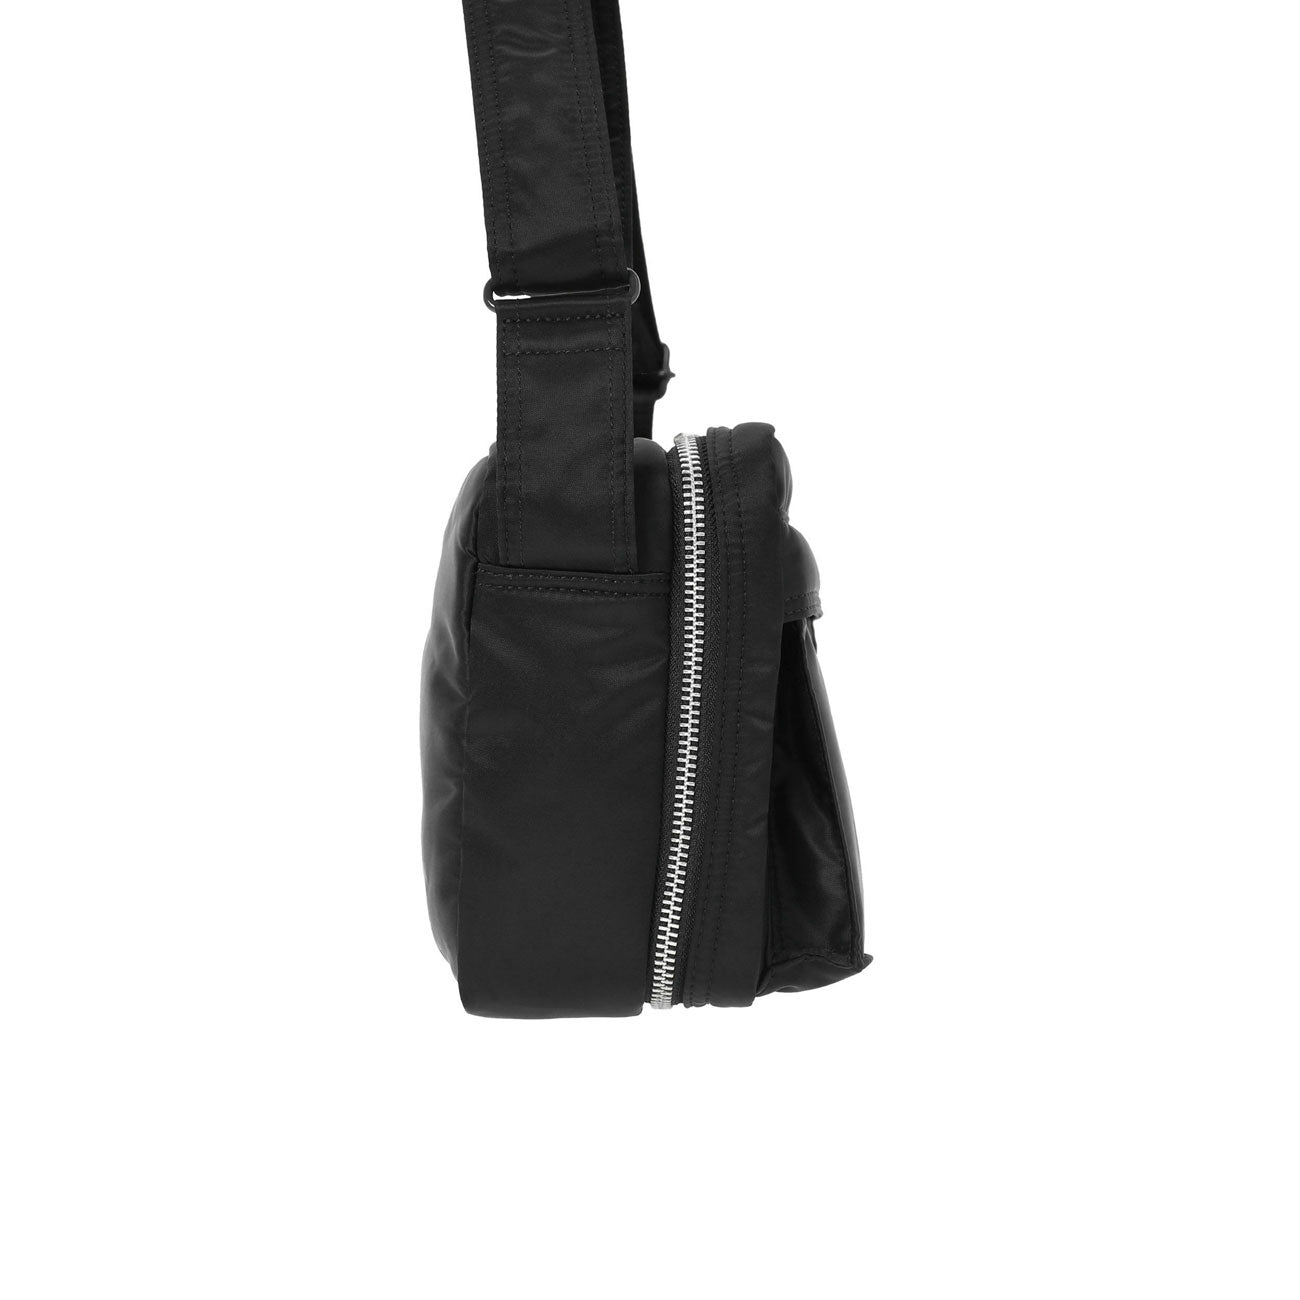 porter-yoshida & co. small tanker shoulder bag (black)